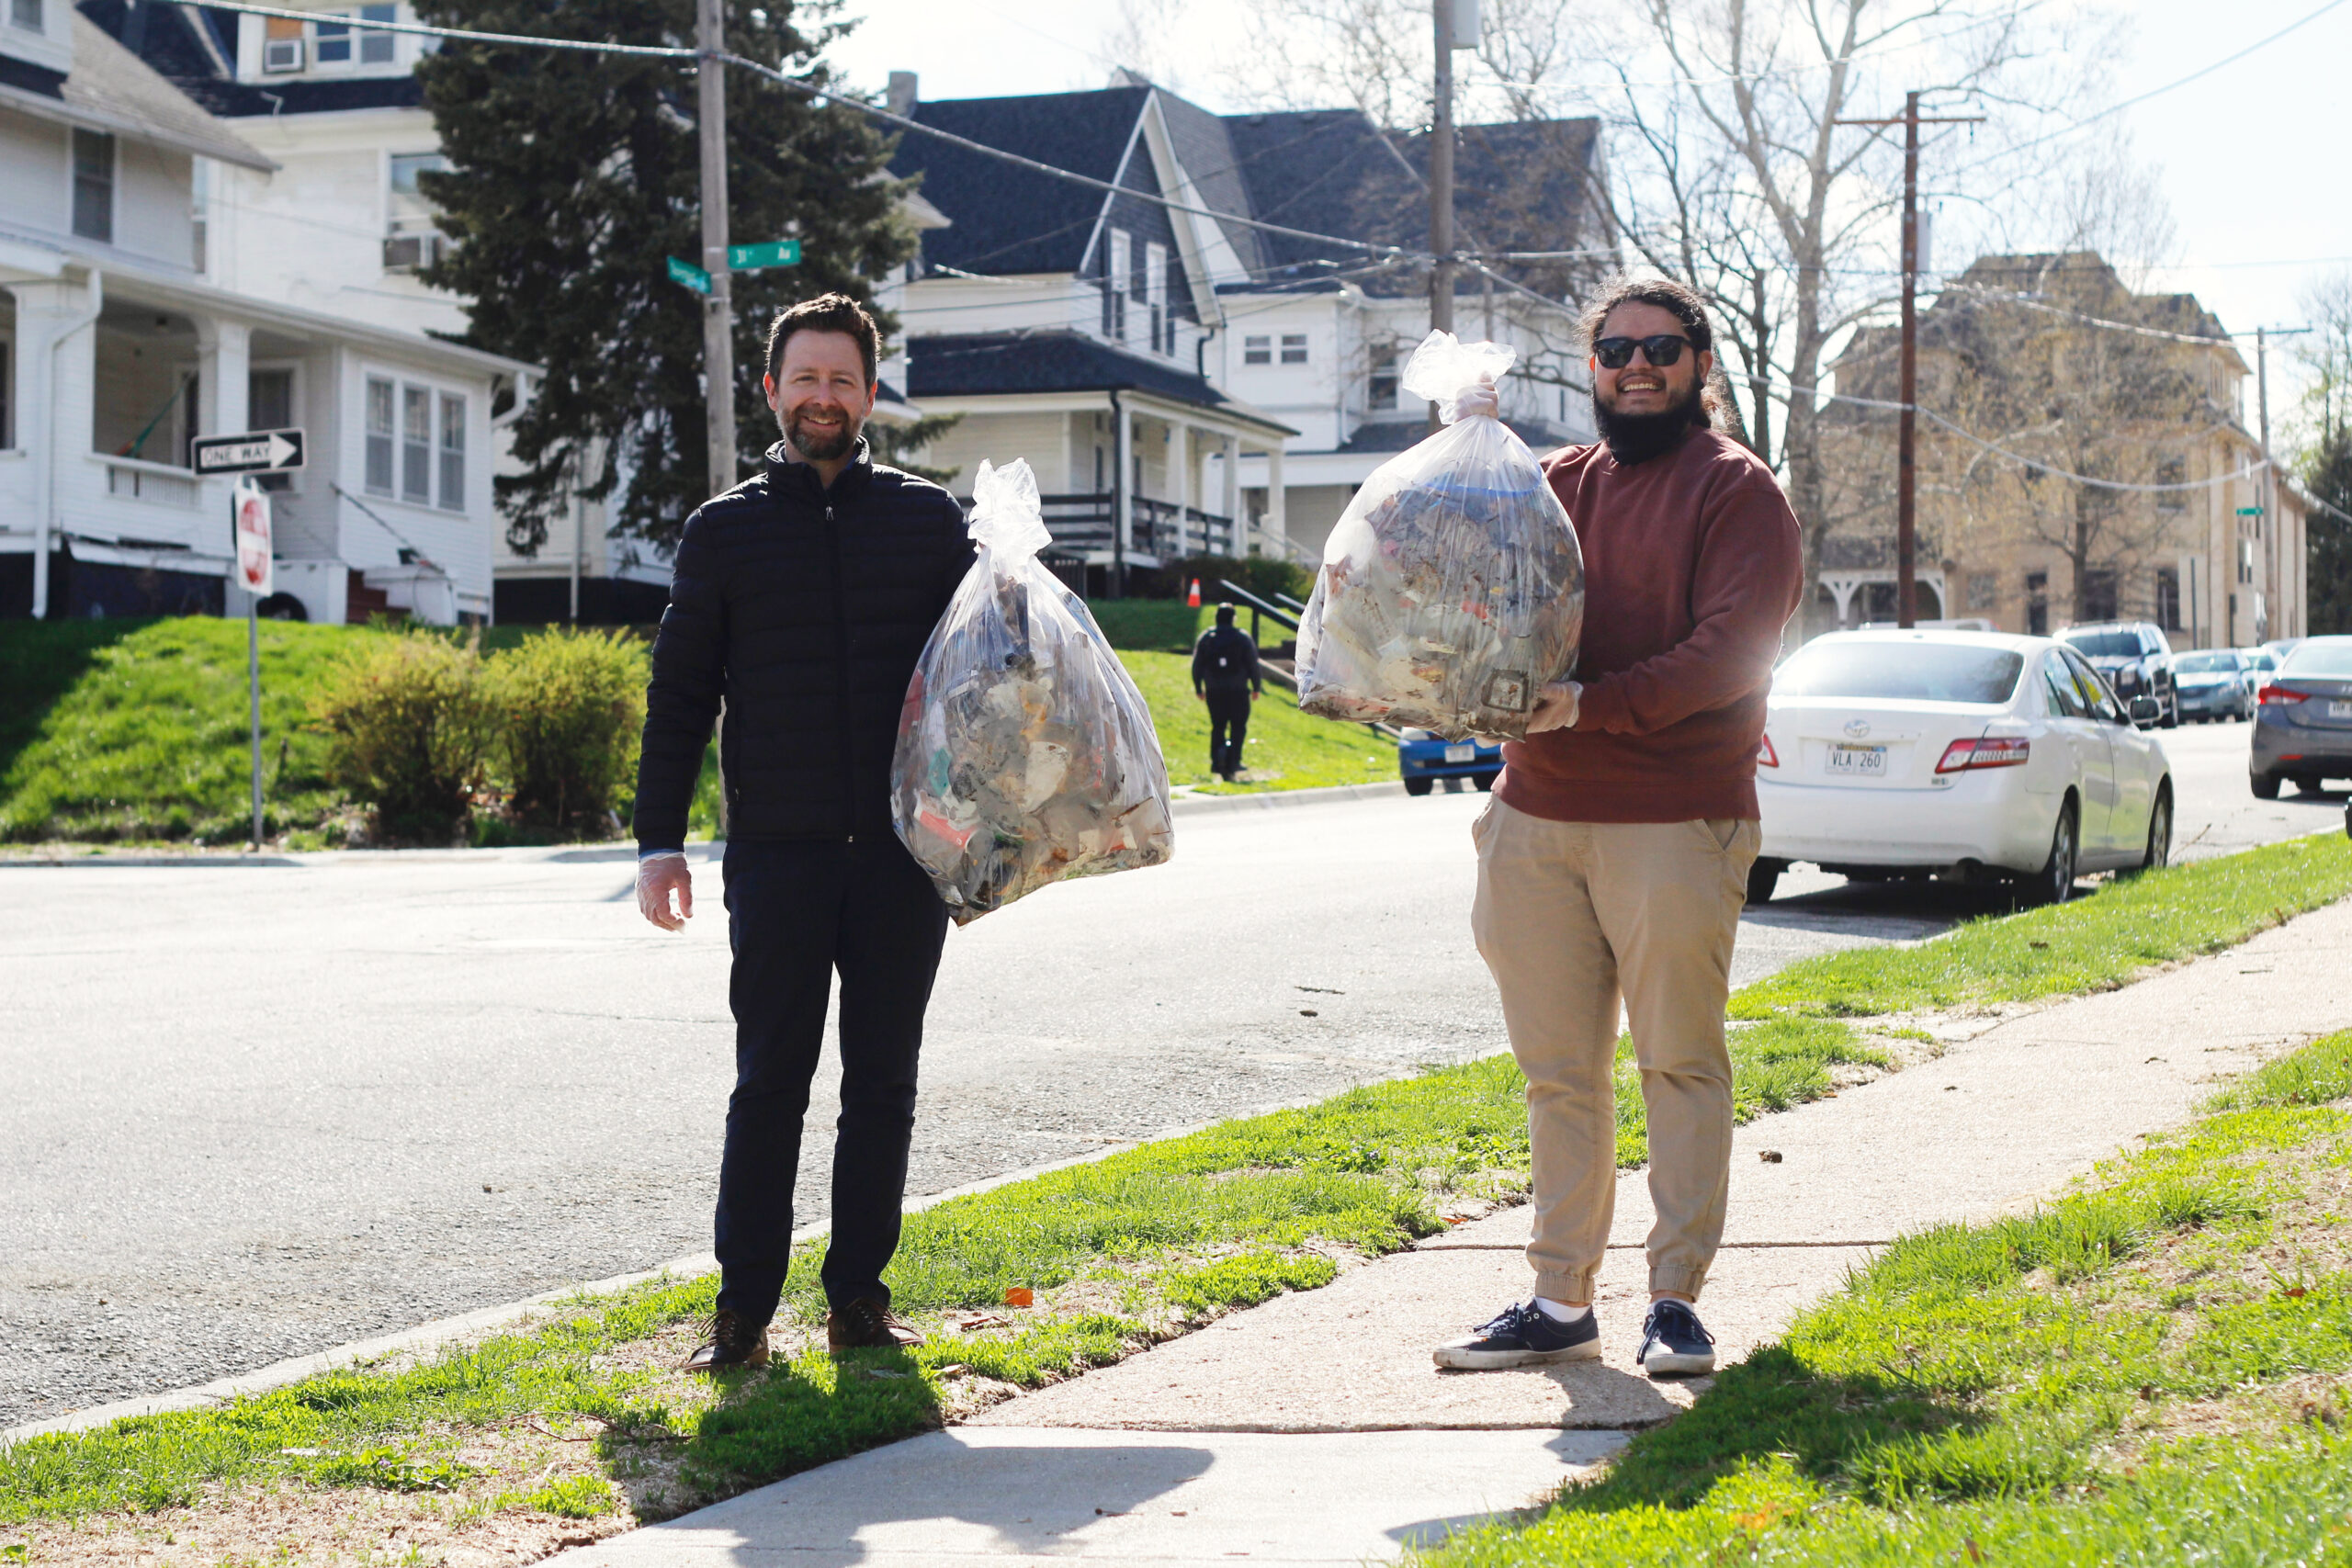 Emspace + Lovgren team members Casey and Randy smile while holding large, full trash bags on a Gifford Park neighborhood sidewalk